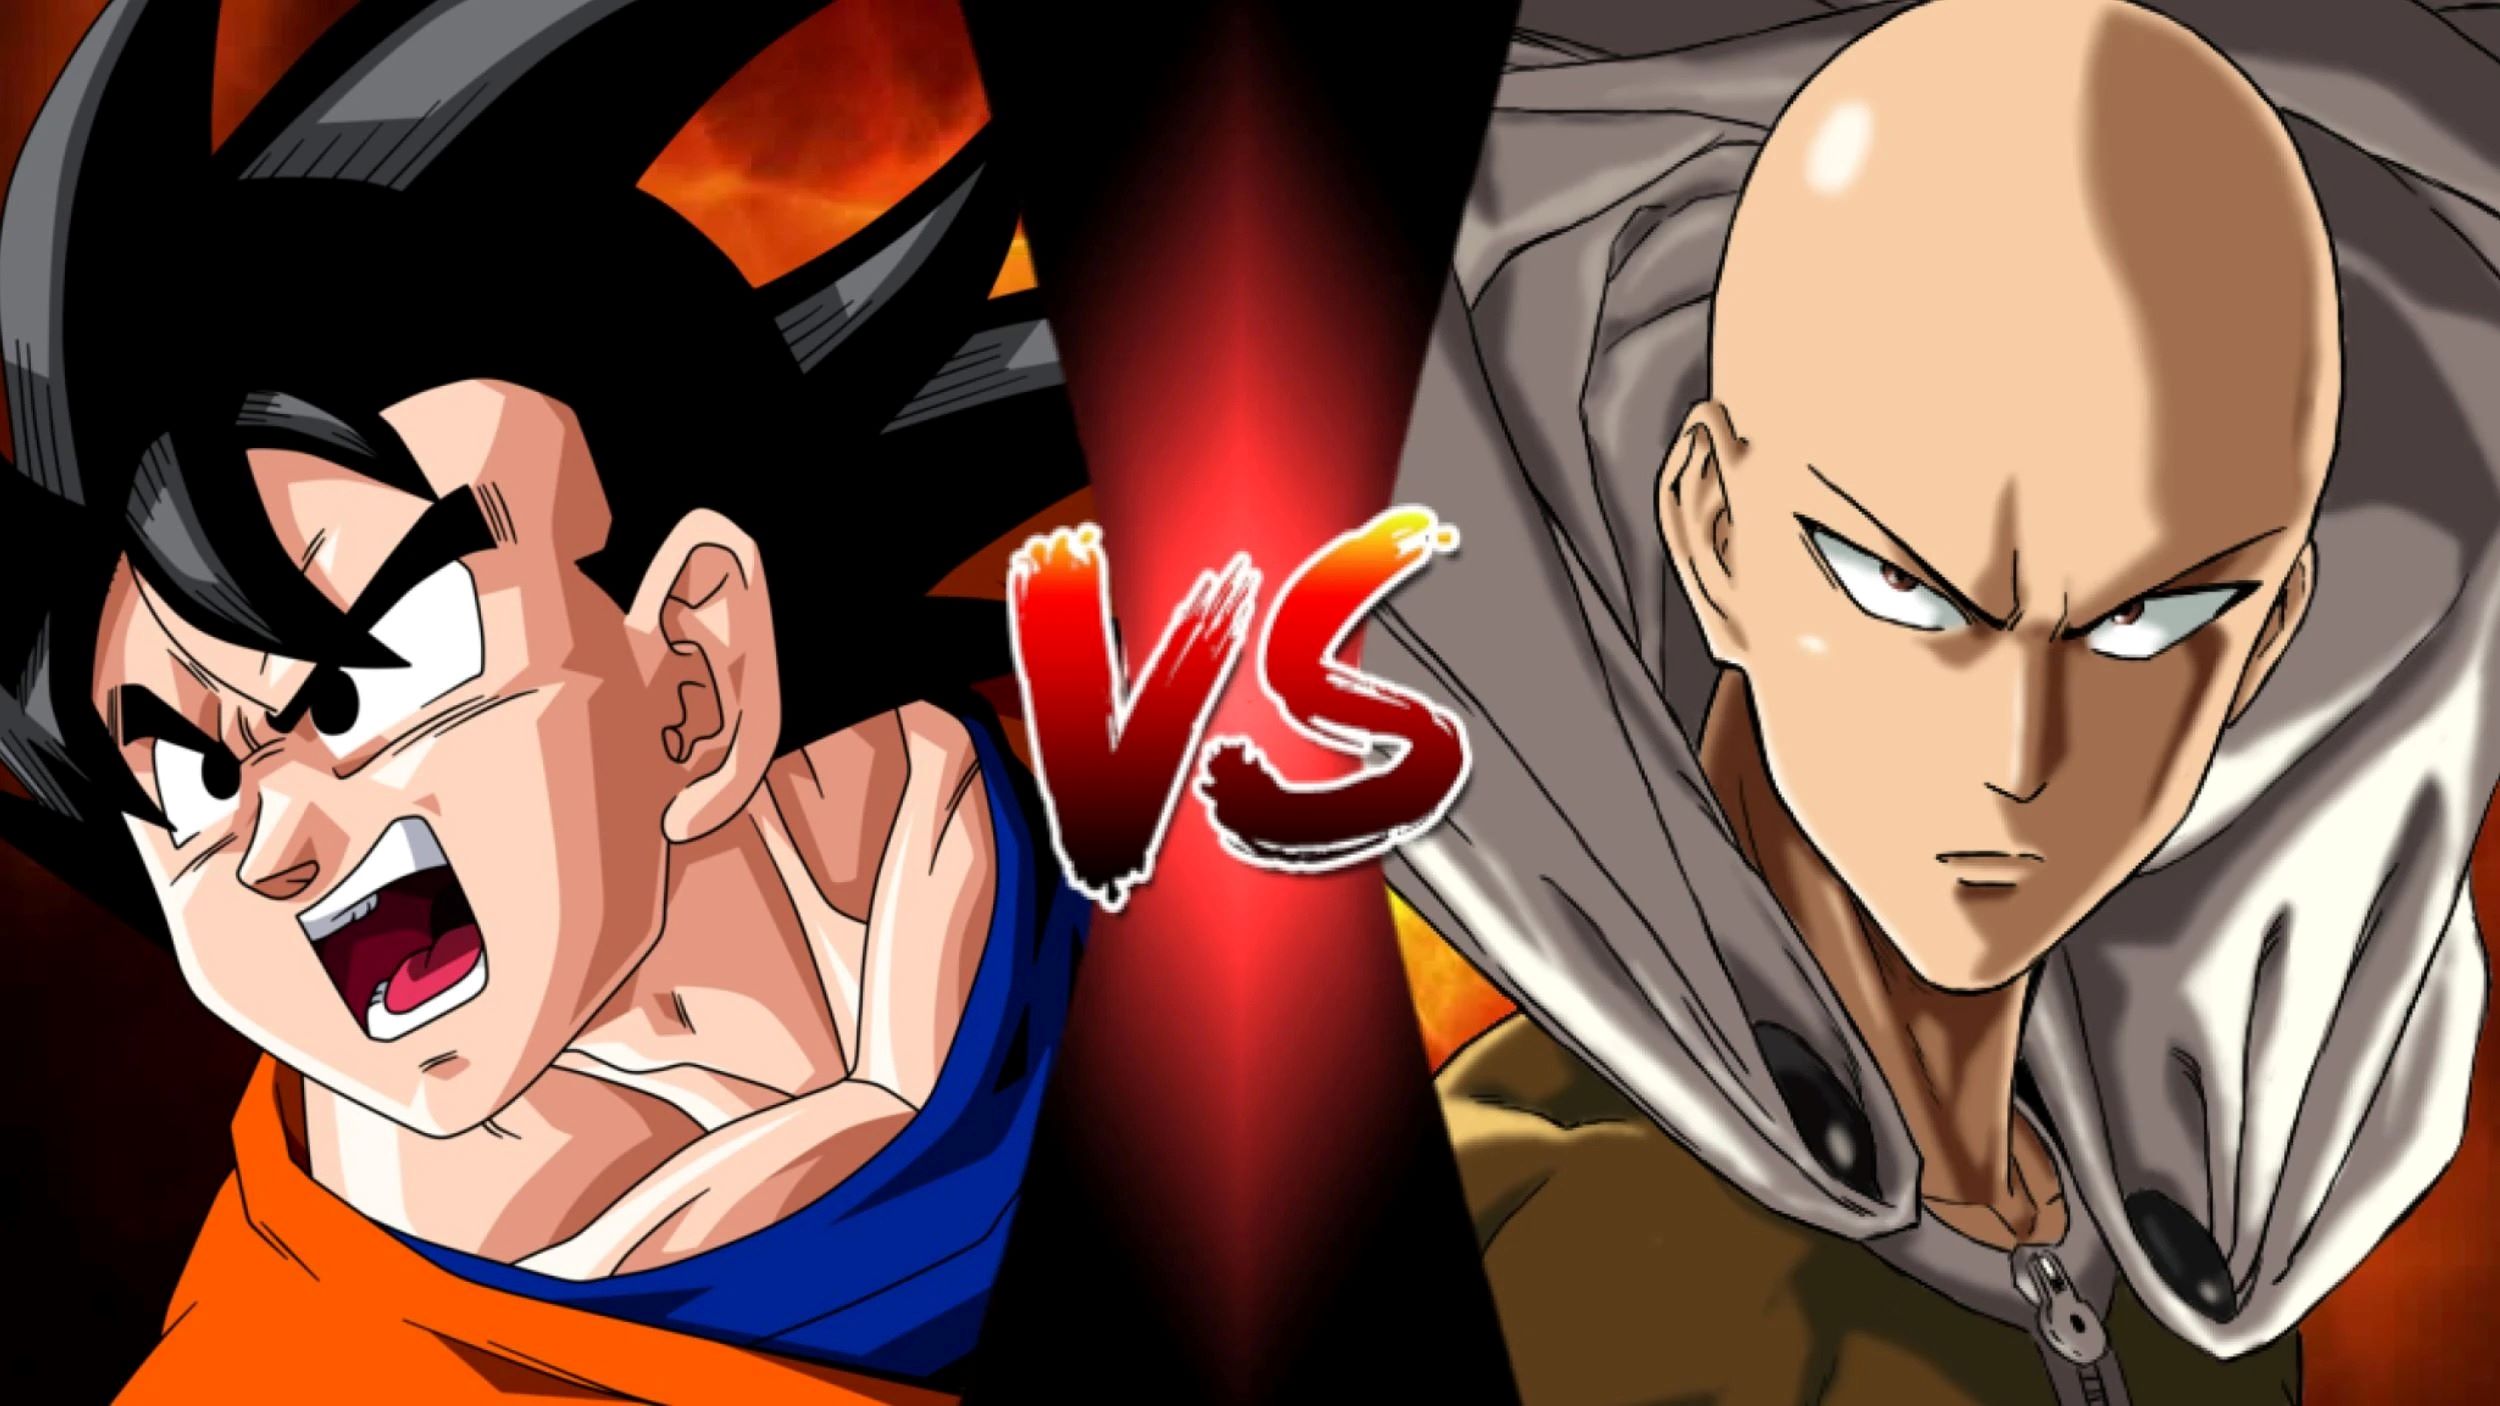 The Ultimate Showdown: Goku Vs. Saitama - Who Emerges Victorious?